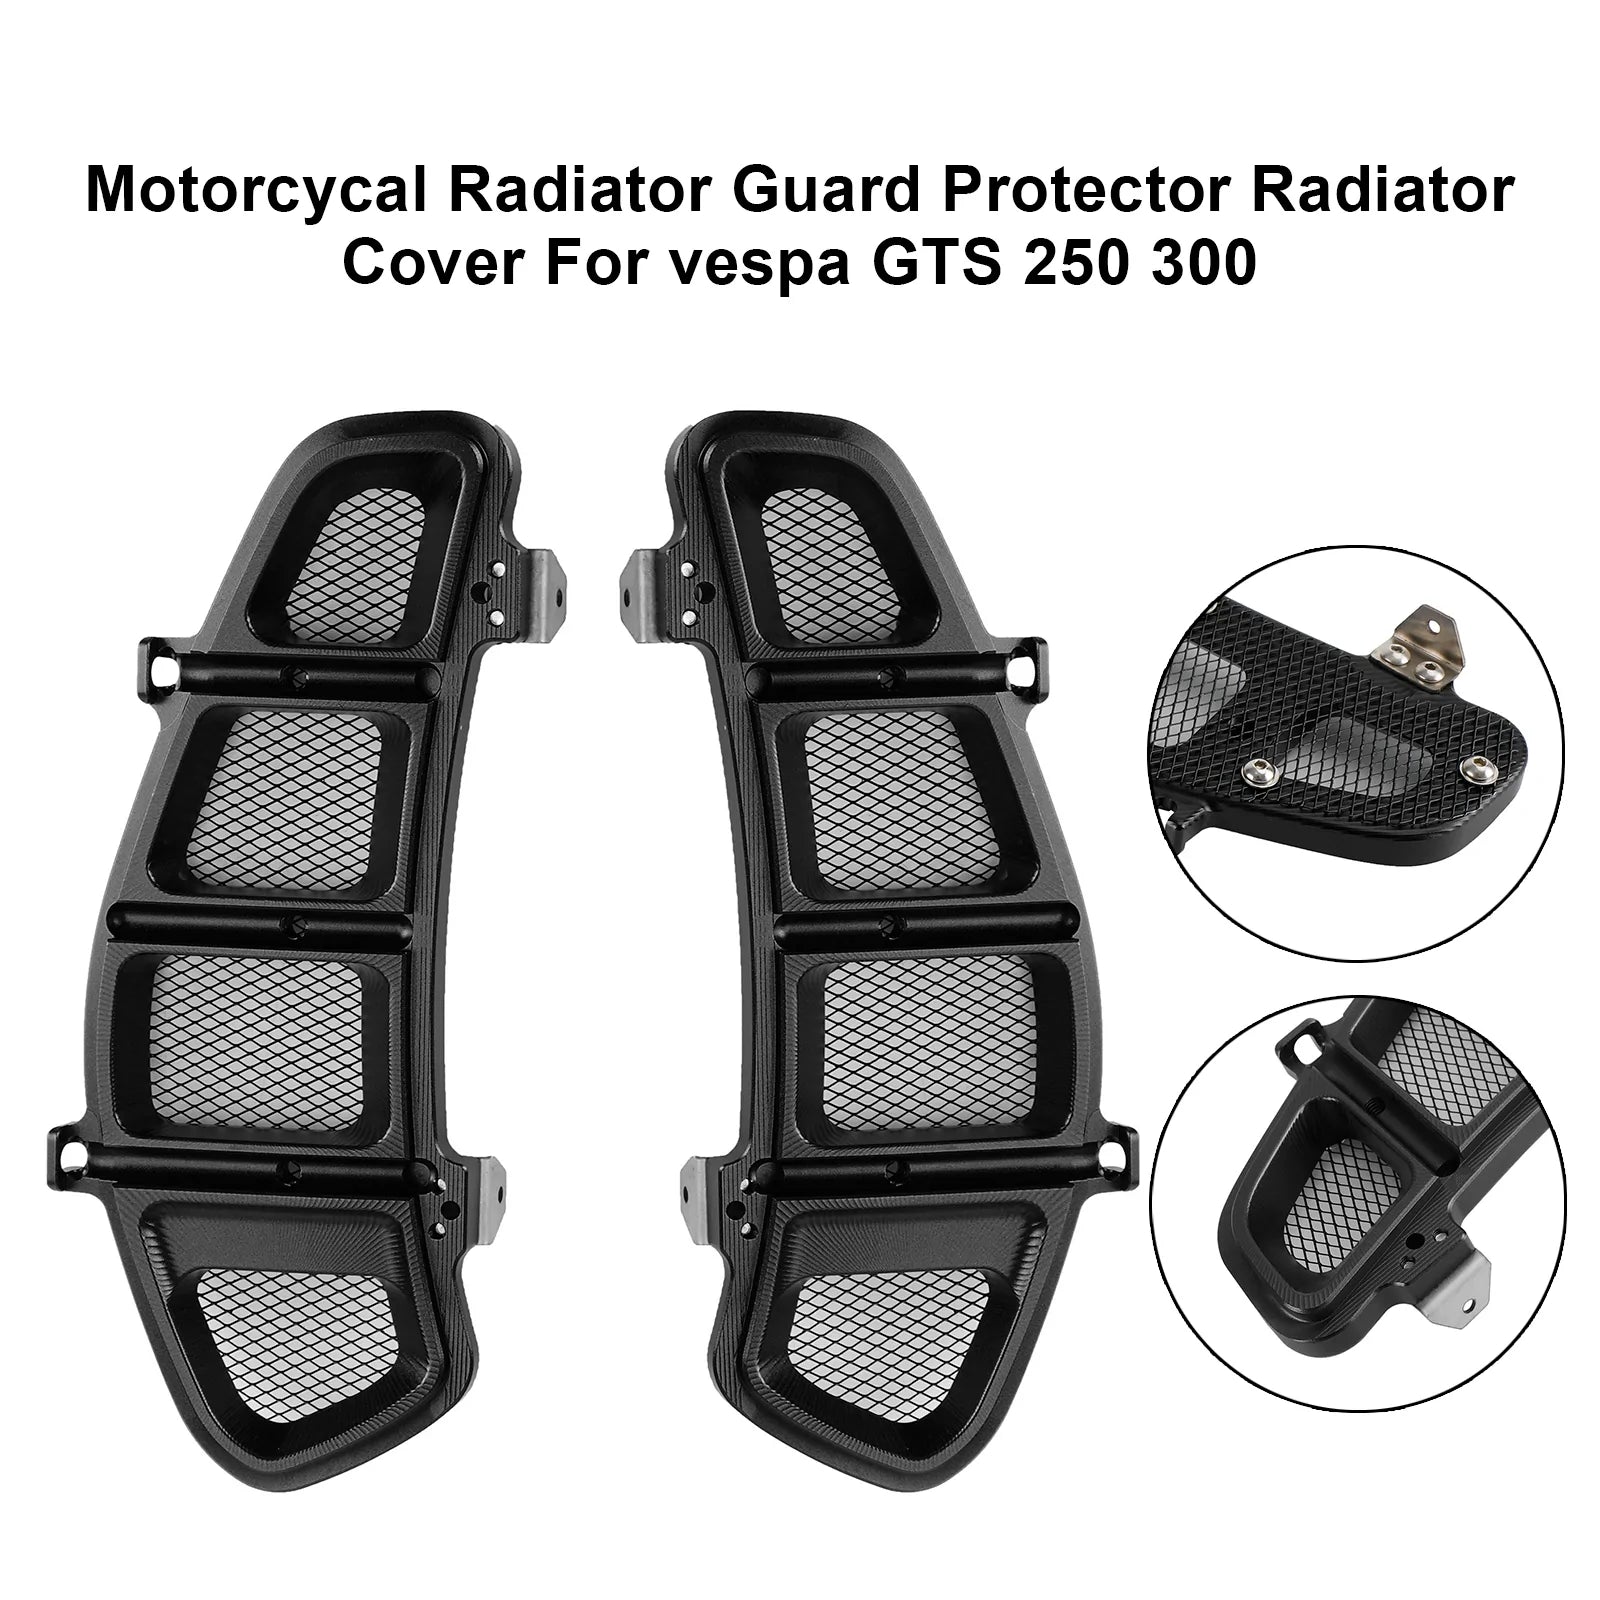 Protector de radiador para motocicleta Vespa GTS 250 300